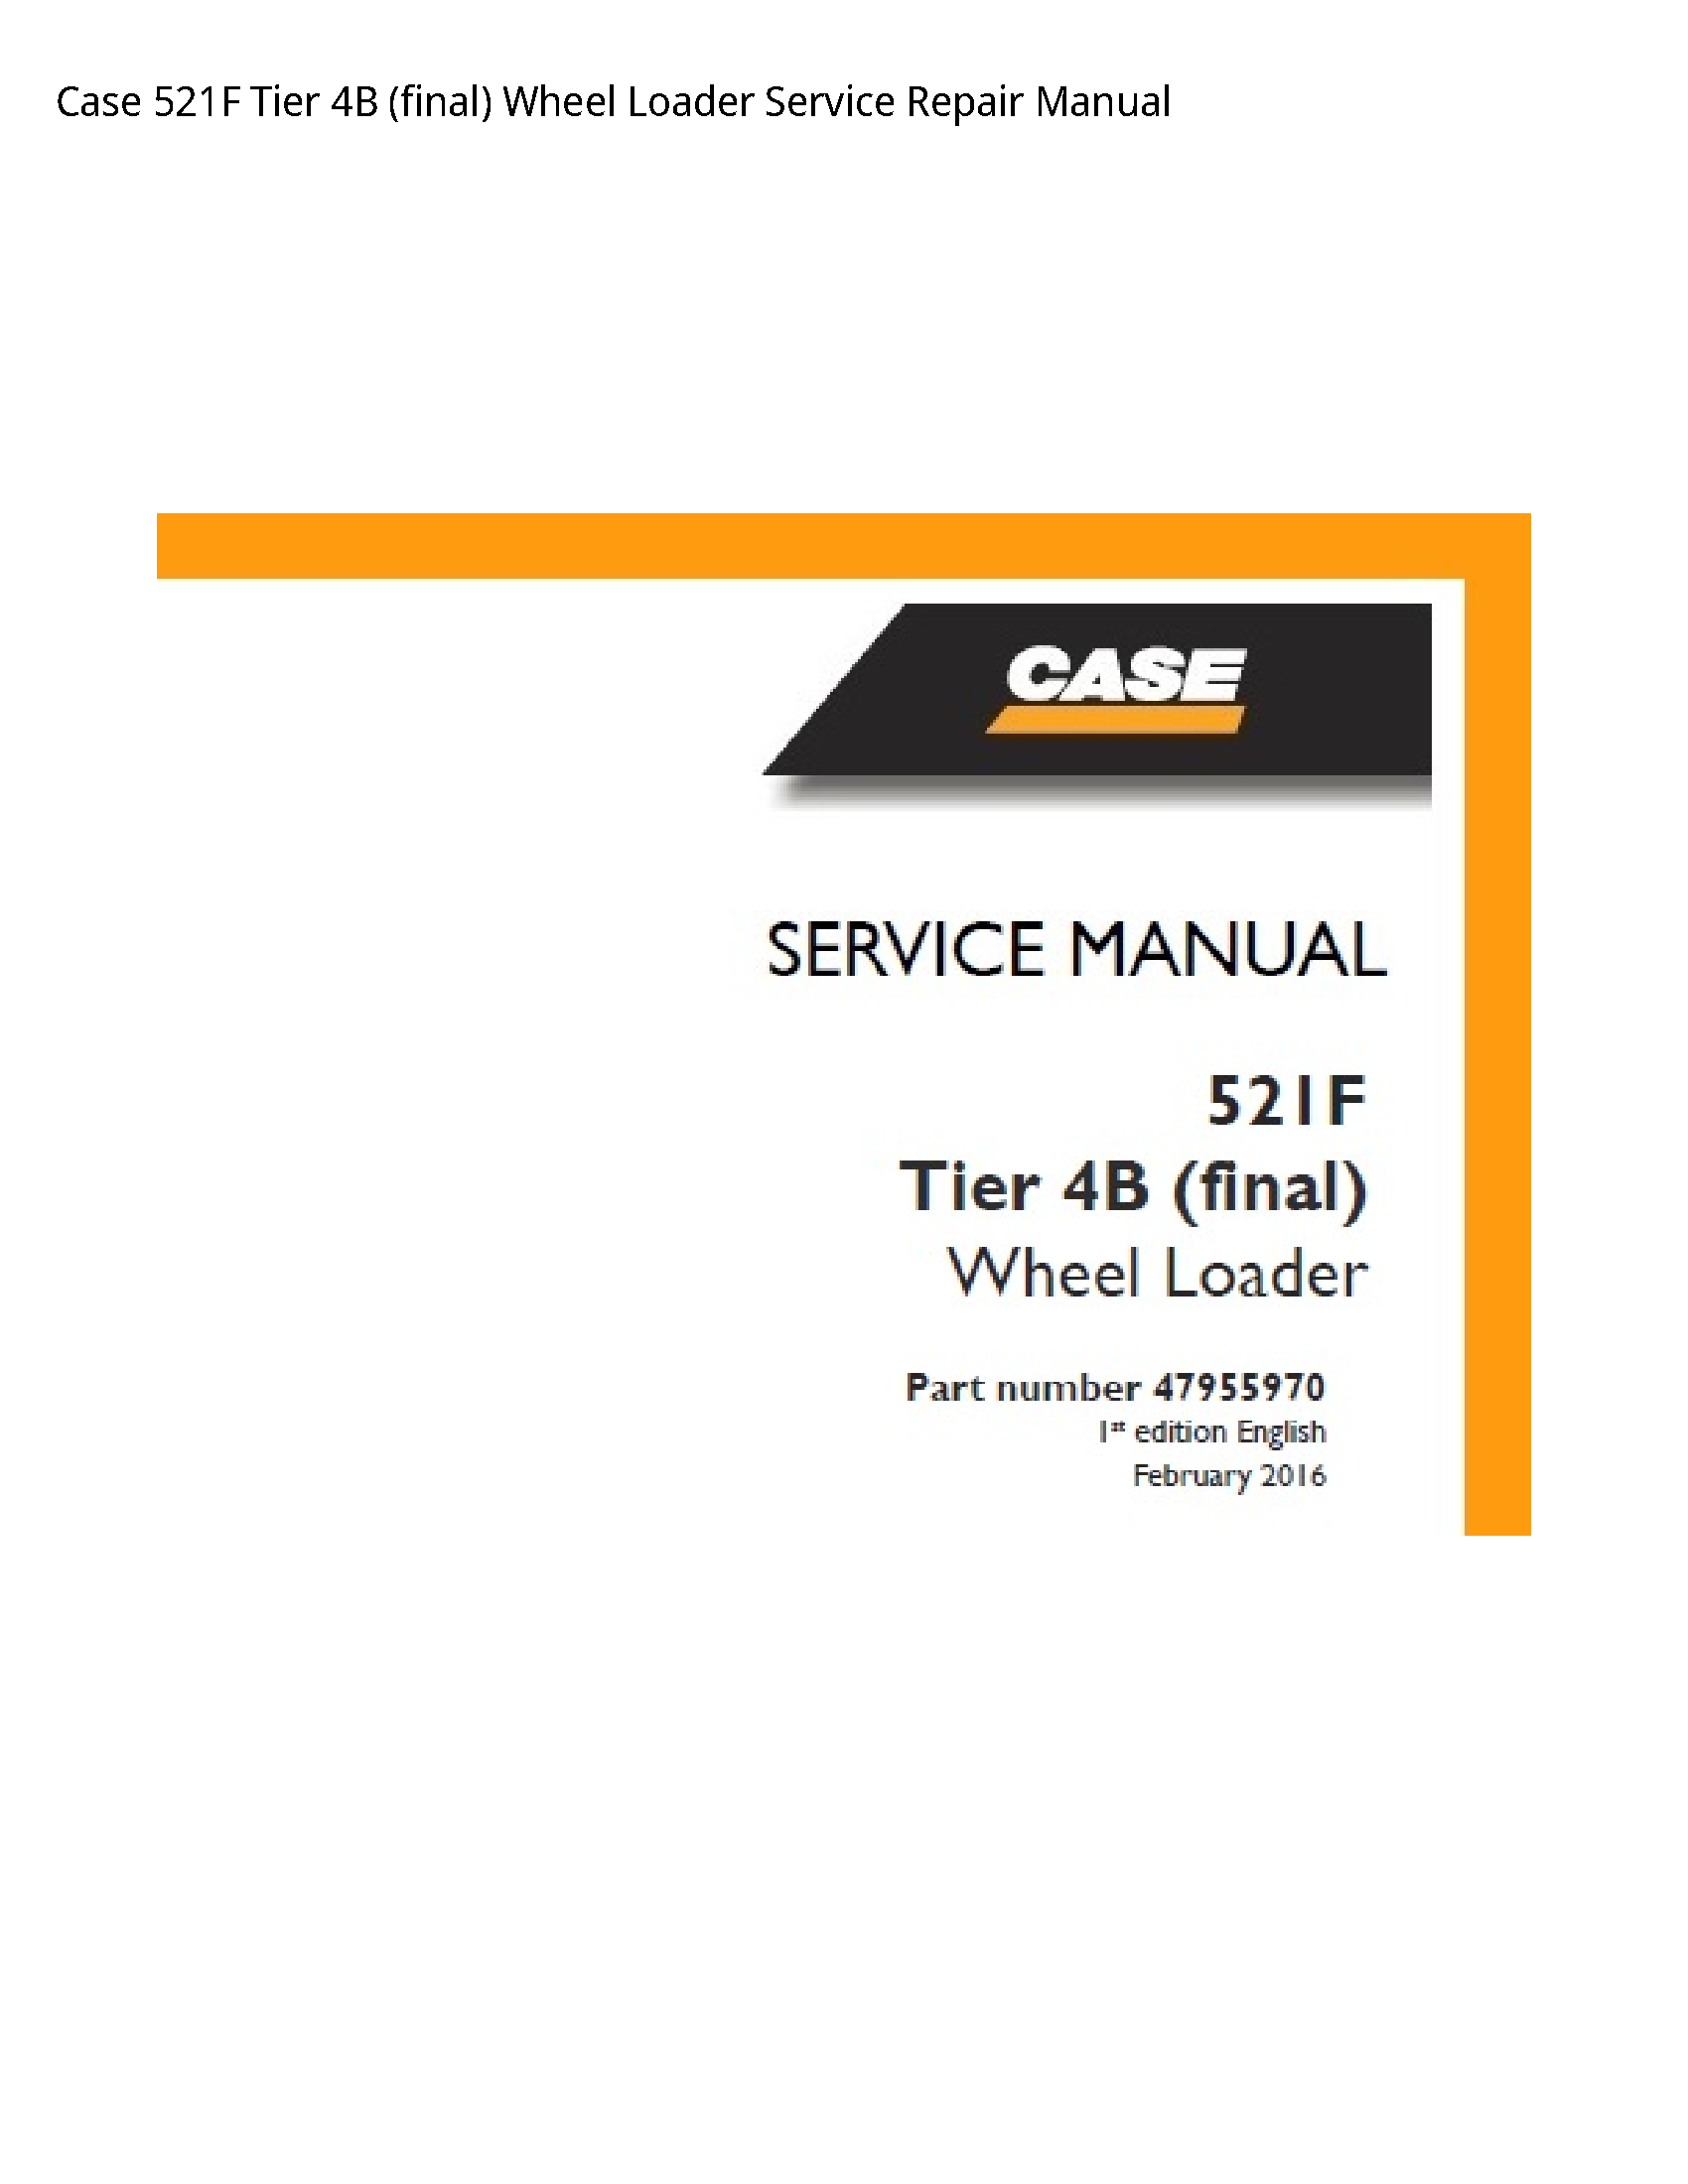 Case/Case IH 521F Tier (final) Wheel Loader manual